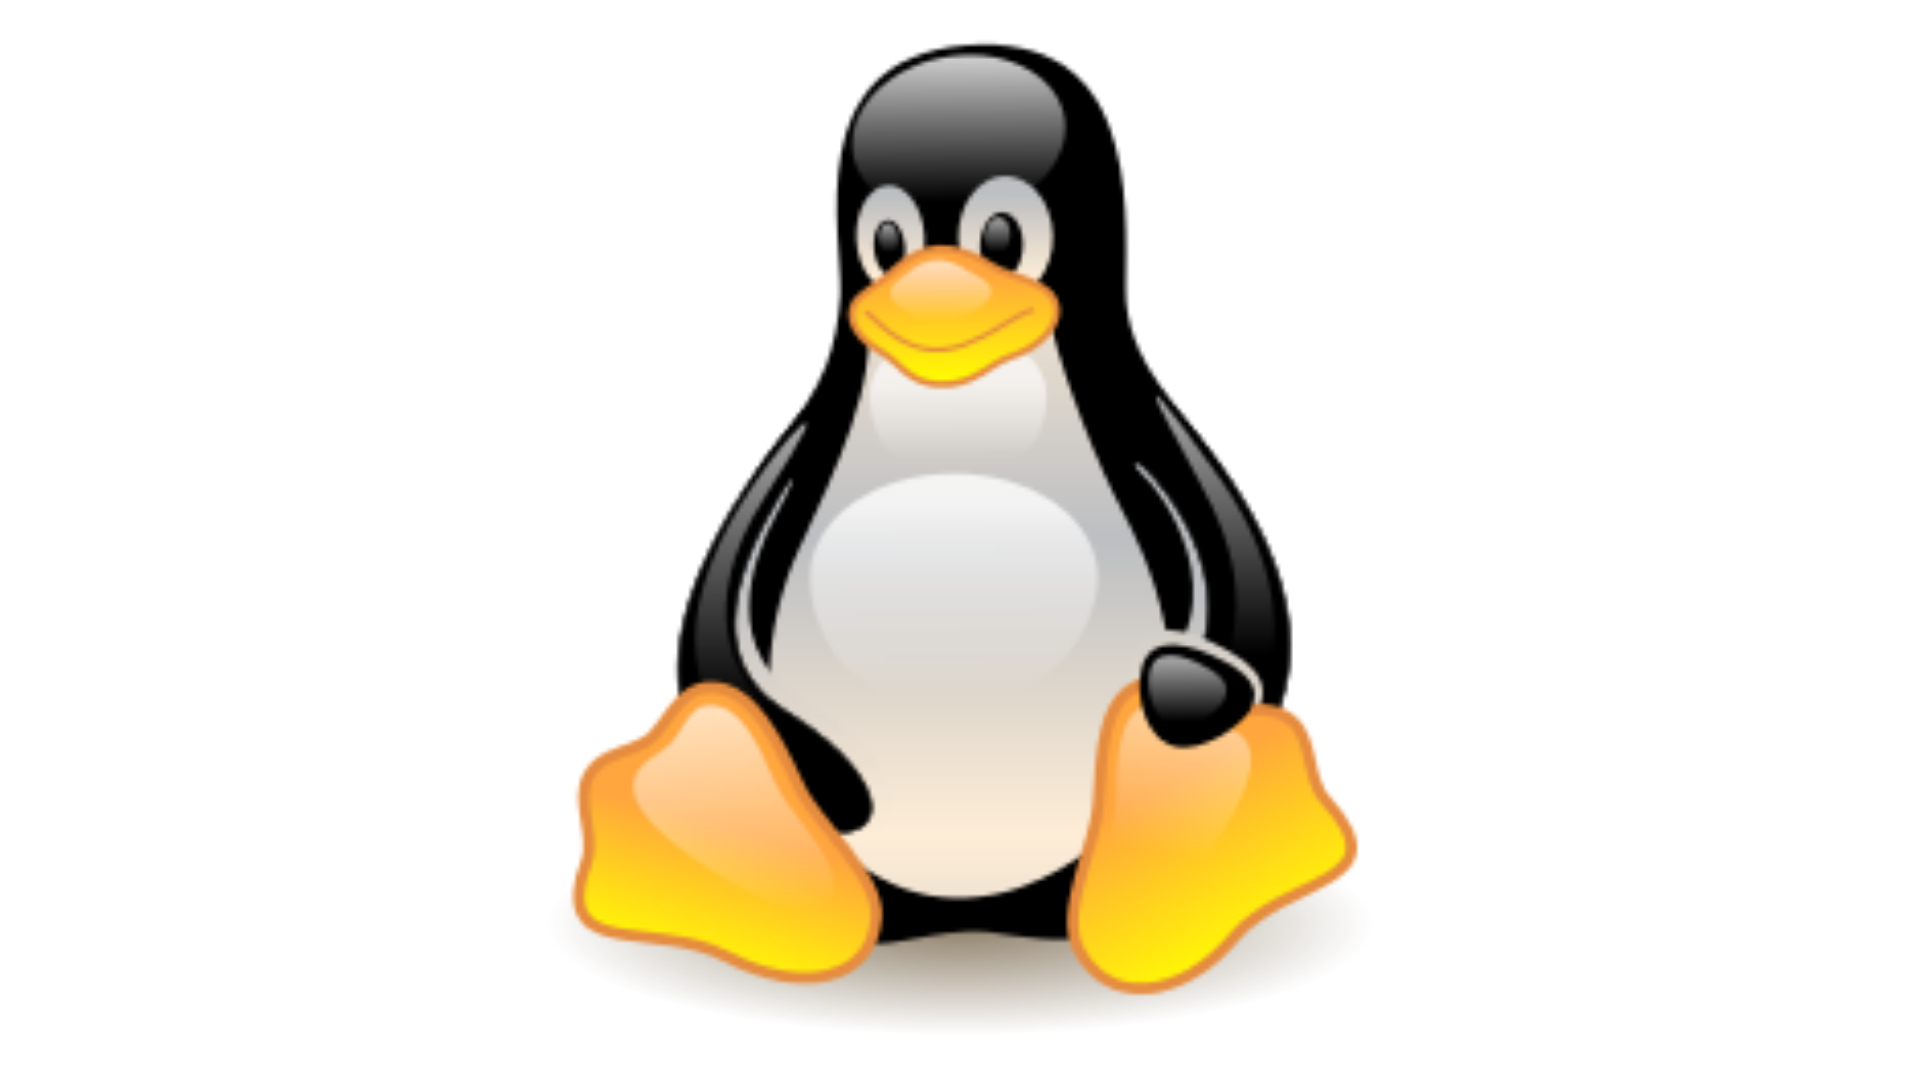 Vk linux. ОС Linux. Юникс линукс. Пингвин линукс. Логотип линукс.